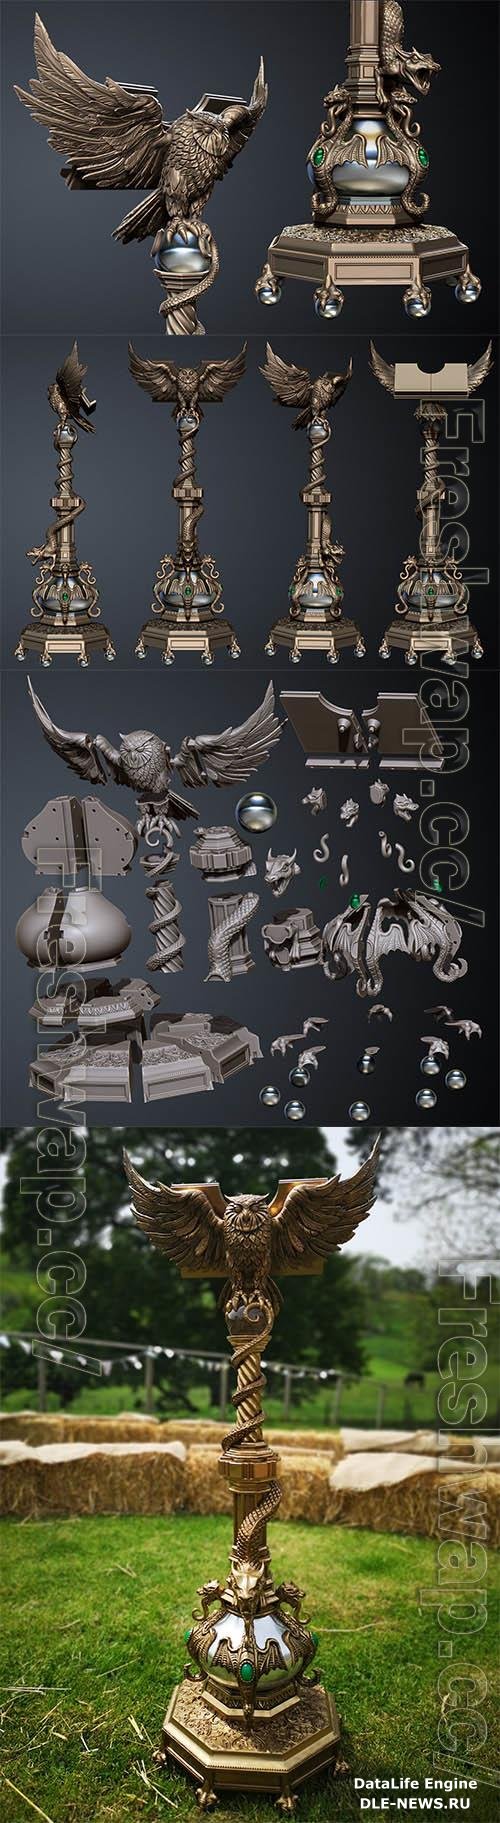 3D Print Hogwarts Owl Lectern